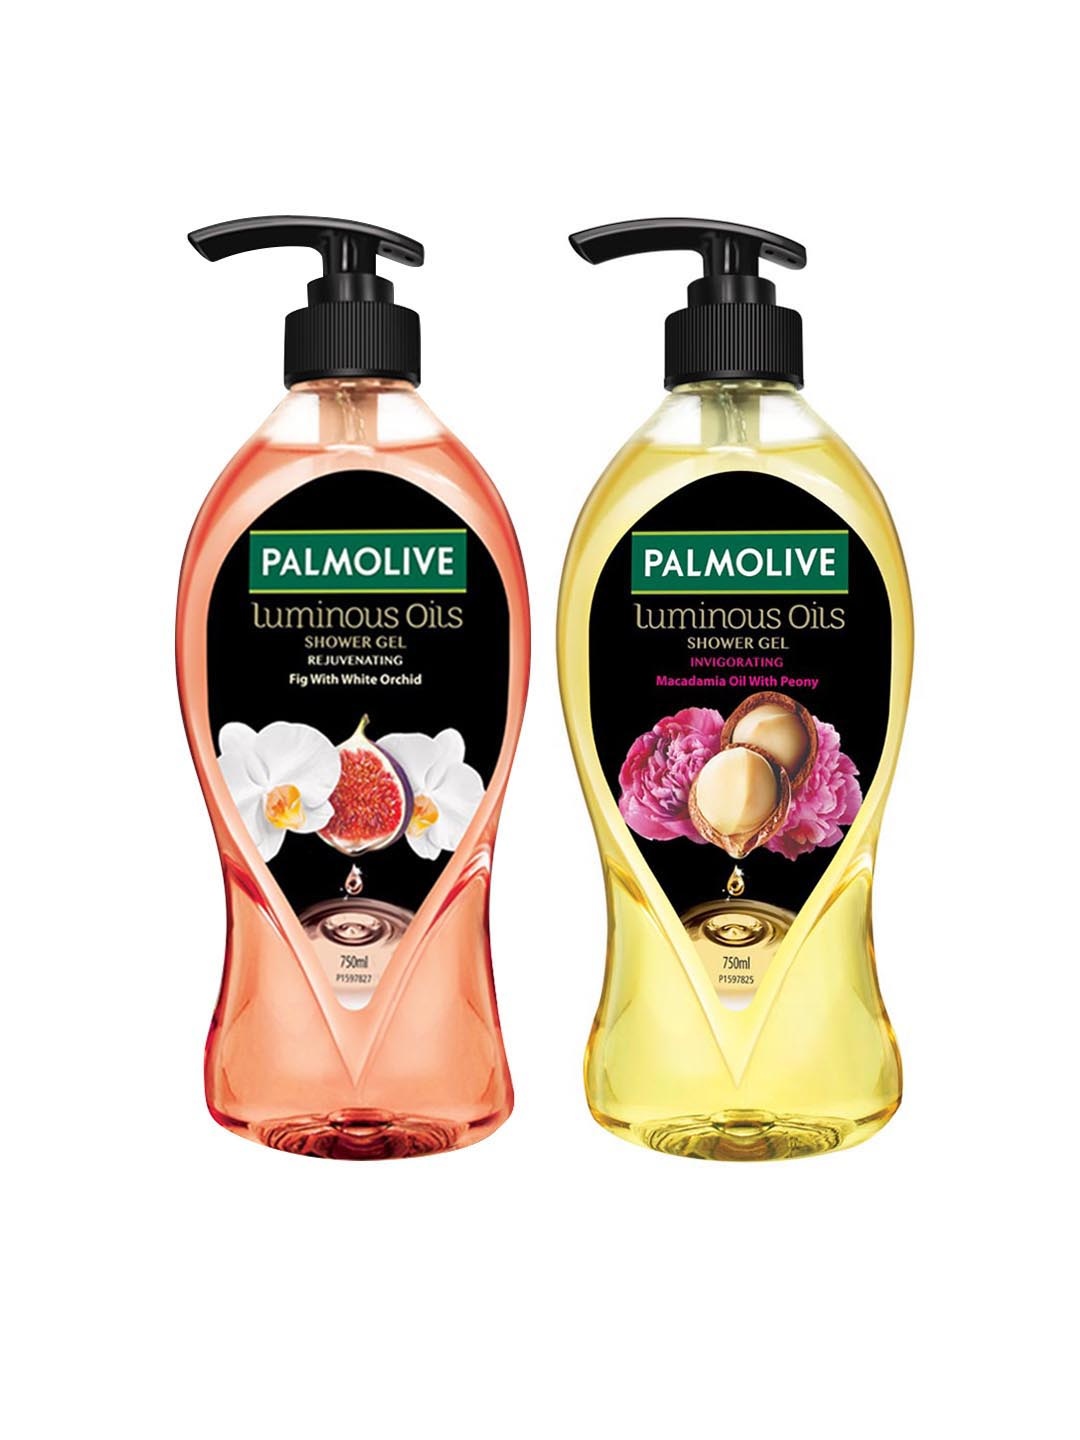 

Palmolive Set of 2 Luminous Oils Shower Gels - Rejuvenating & Invigorating - 750 ml each, Yellow